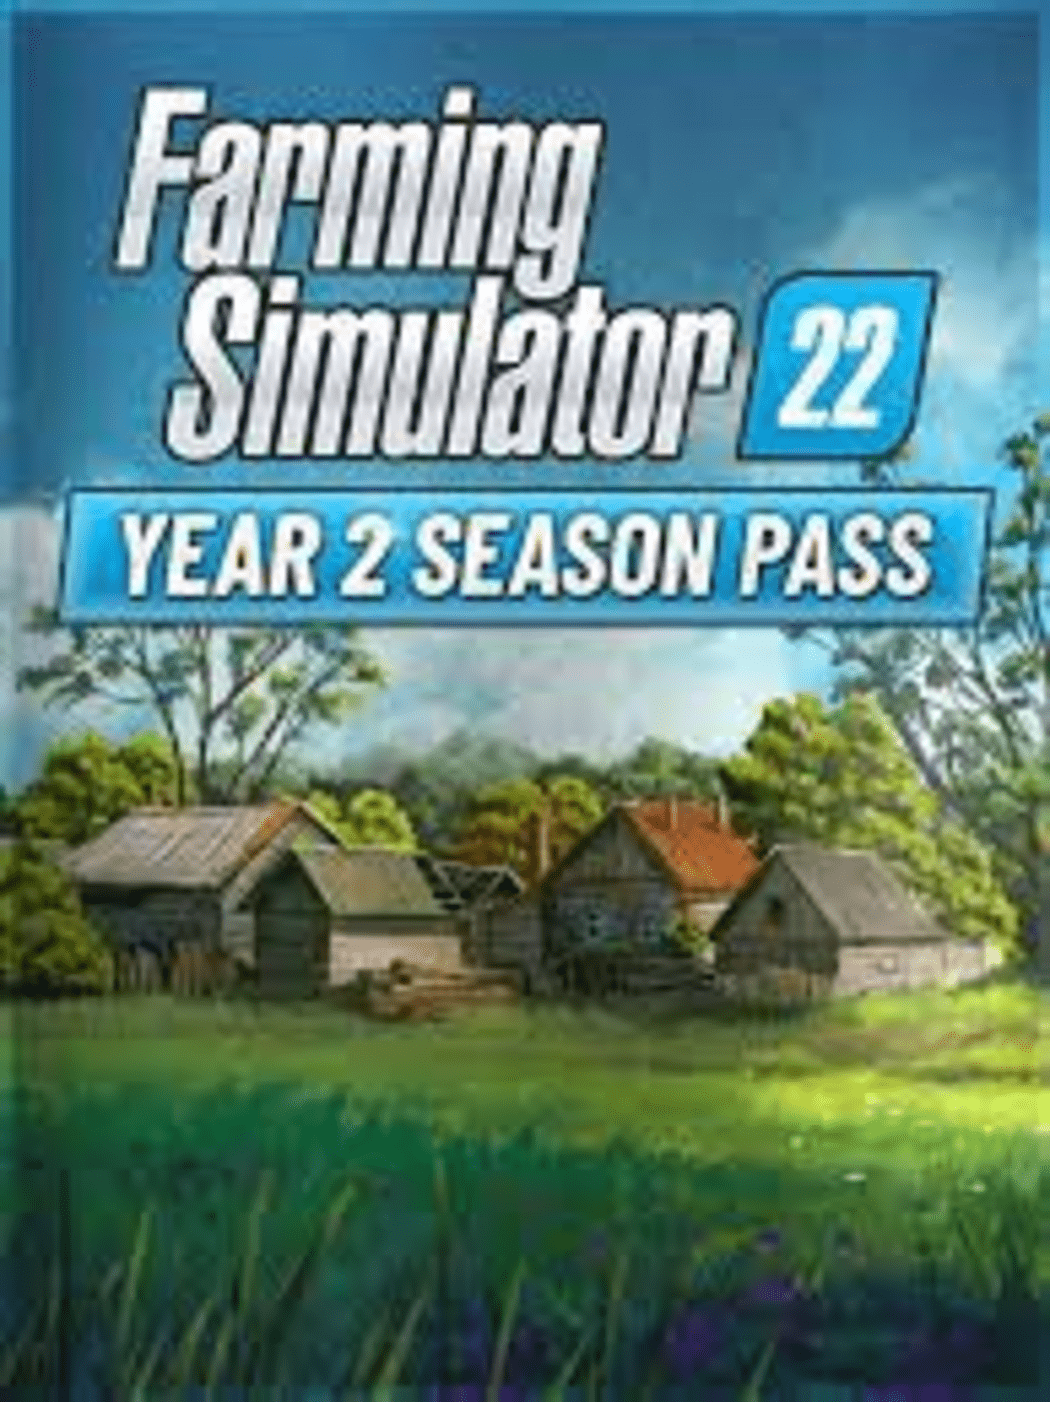 Ranch Simulator Steam Key GLOBAL